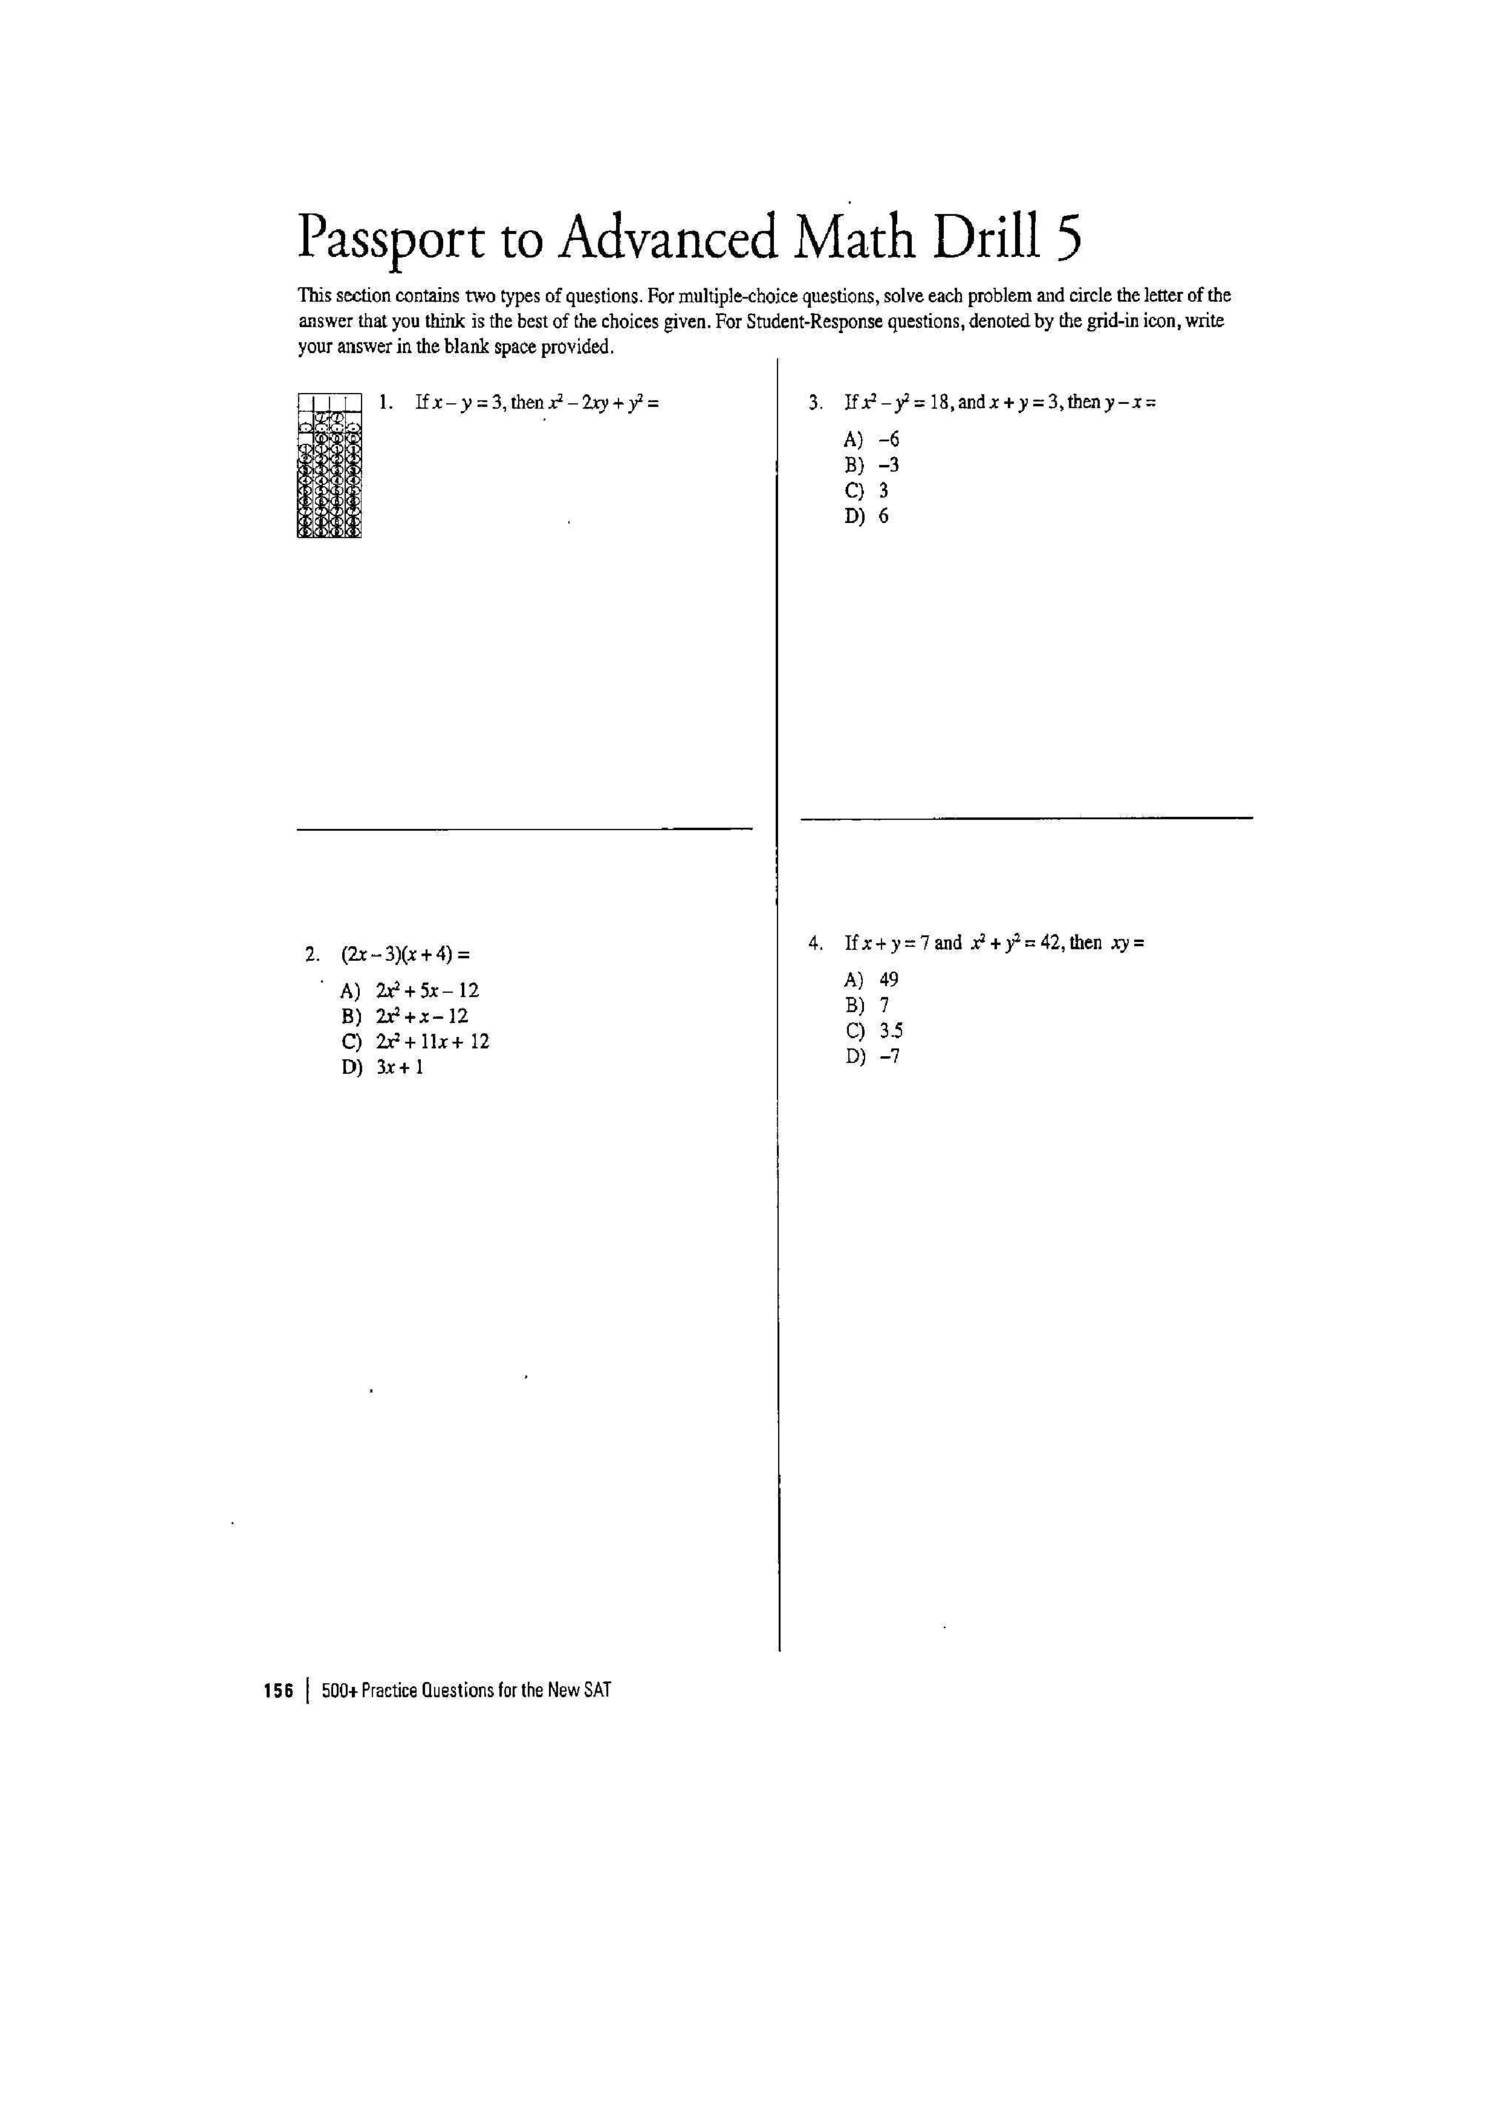 sat math practice pdf